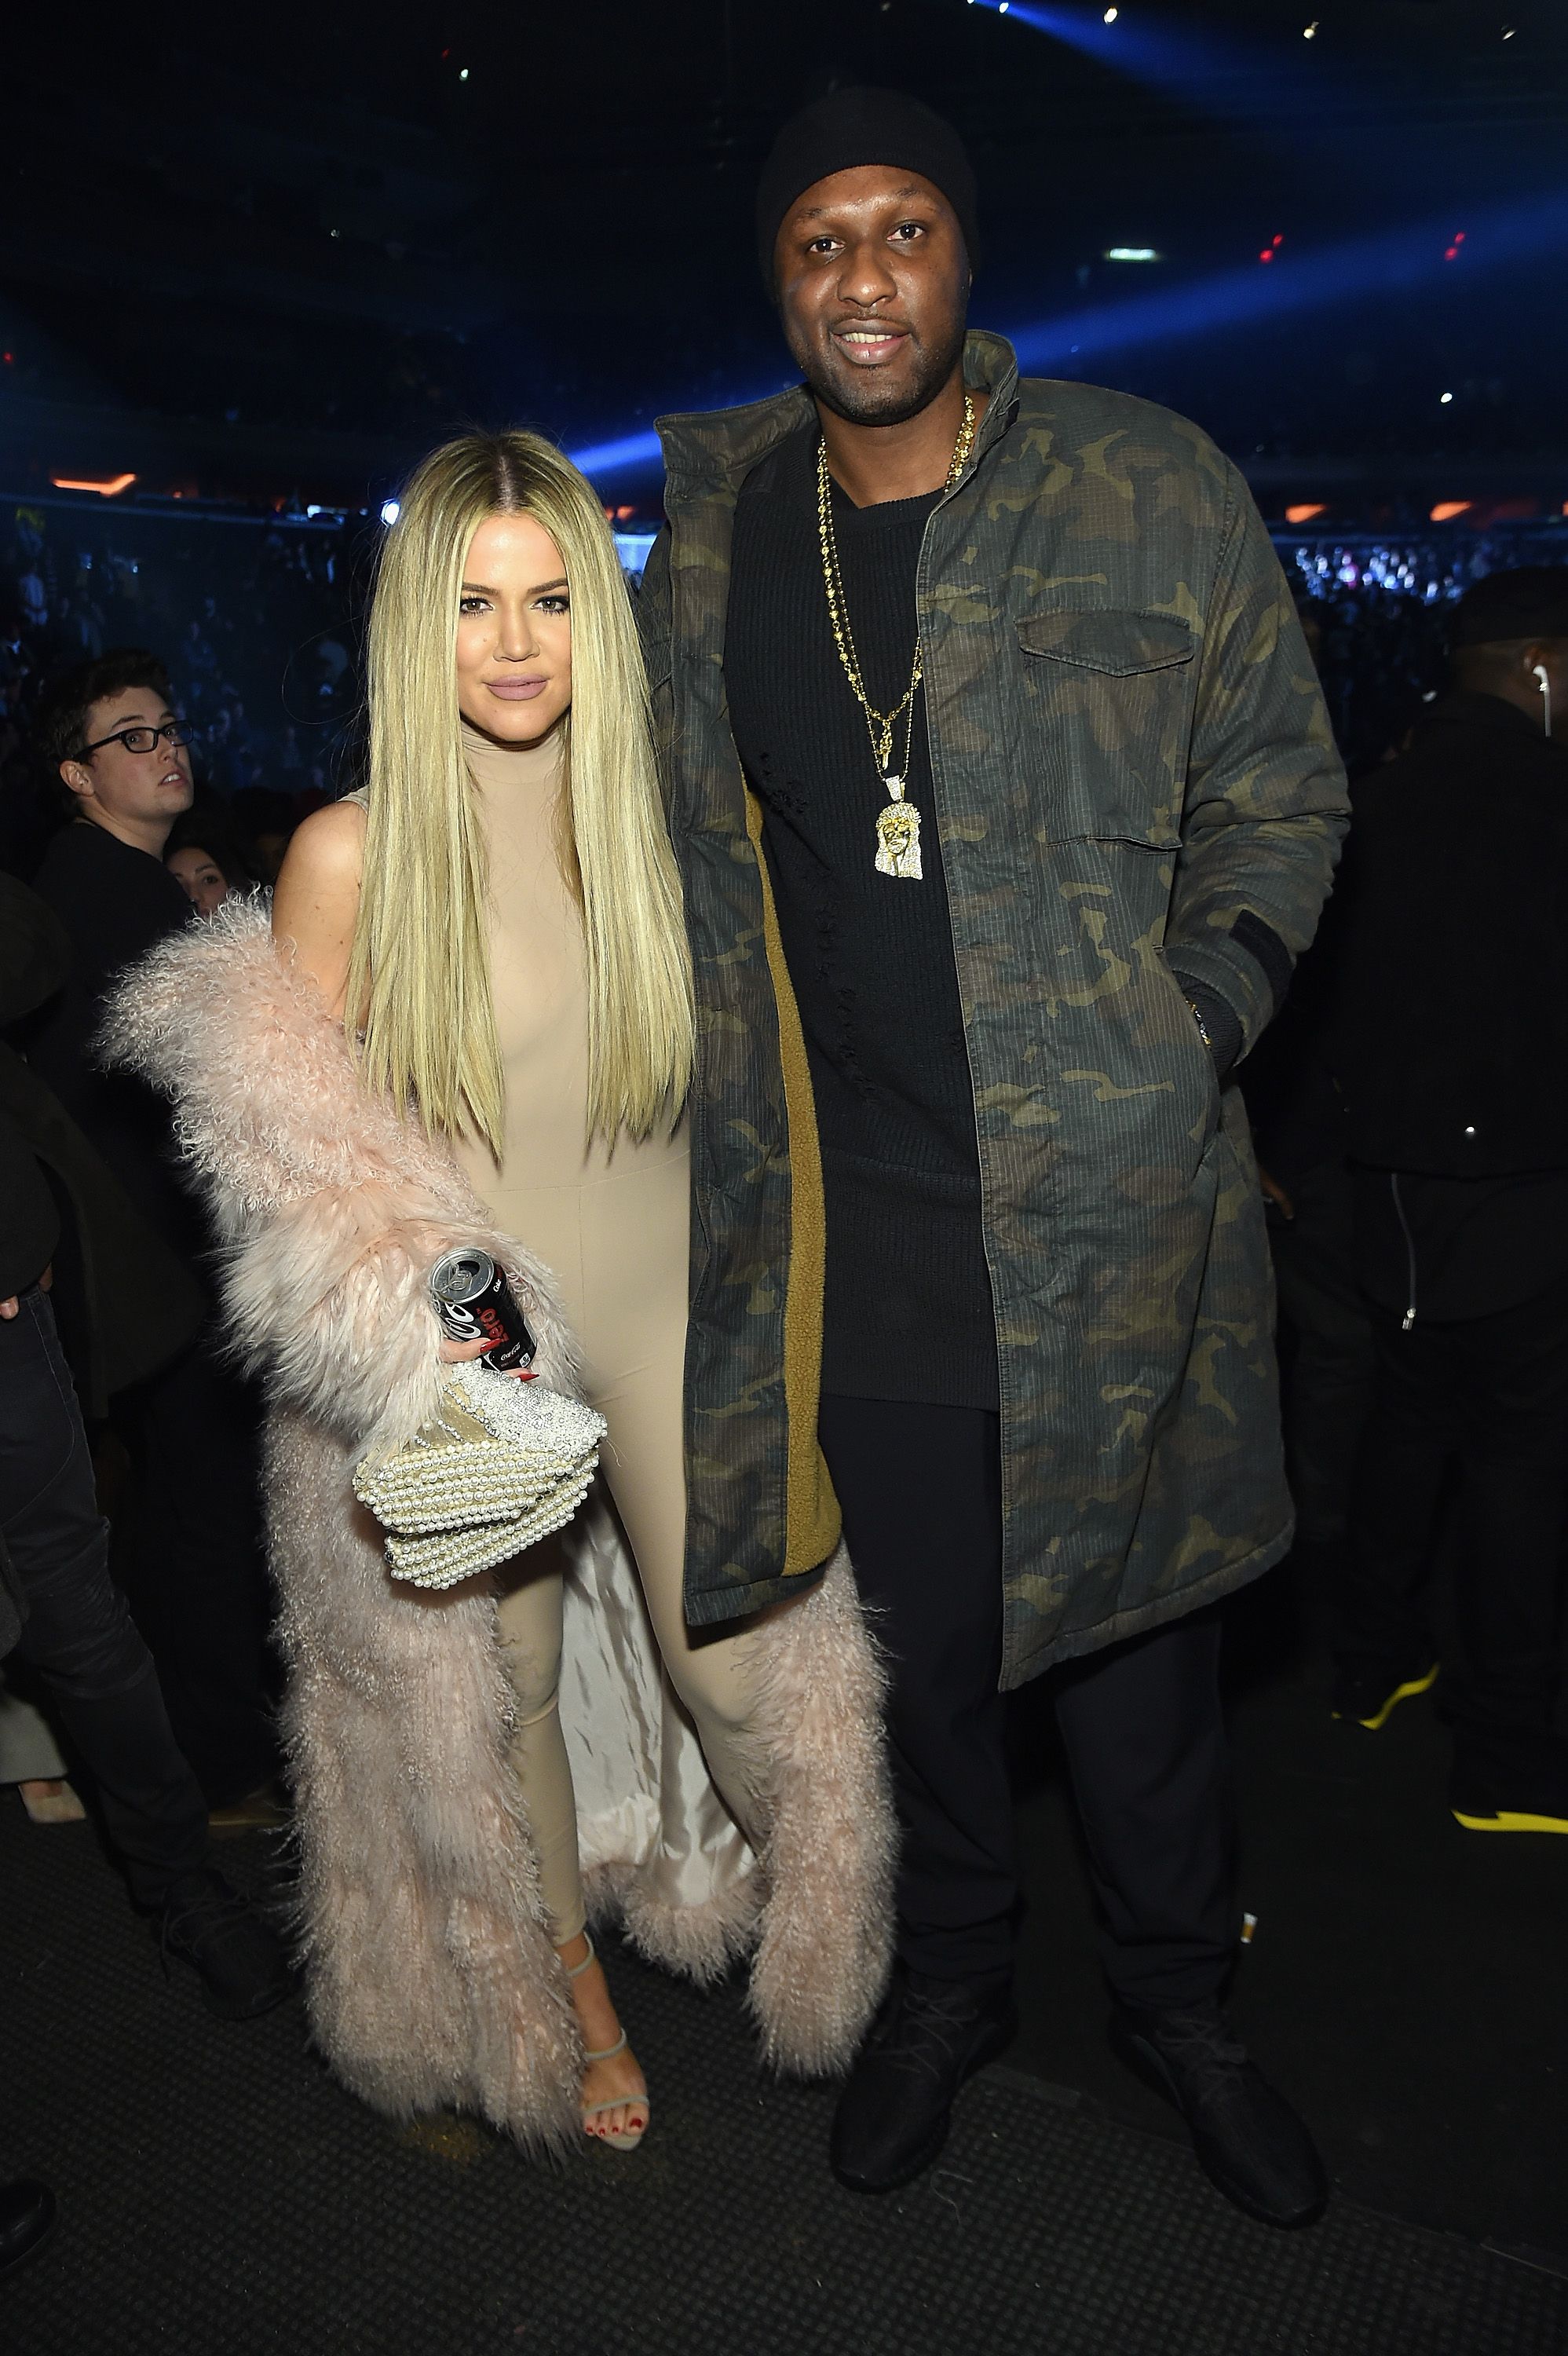 Khloe Kardashian and Lamar Odom at an event